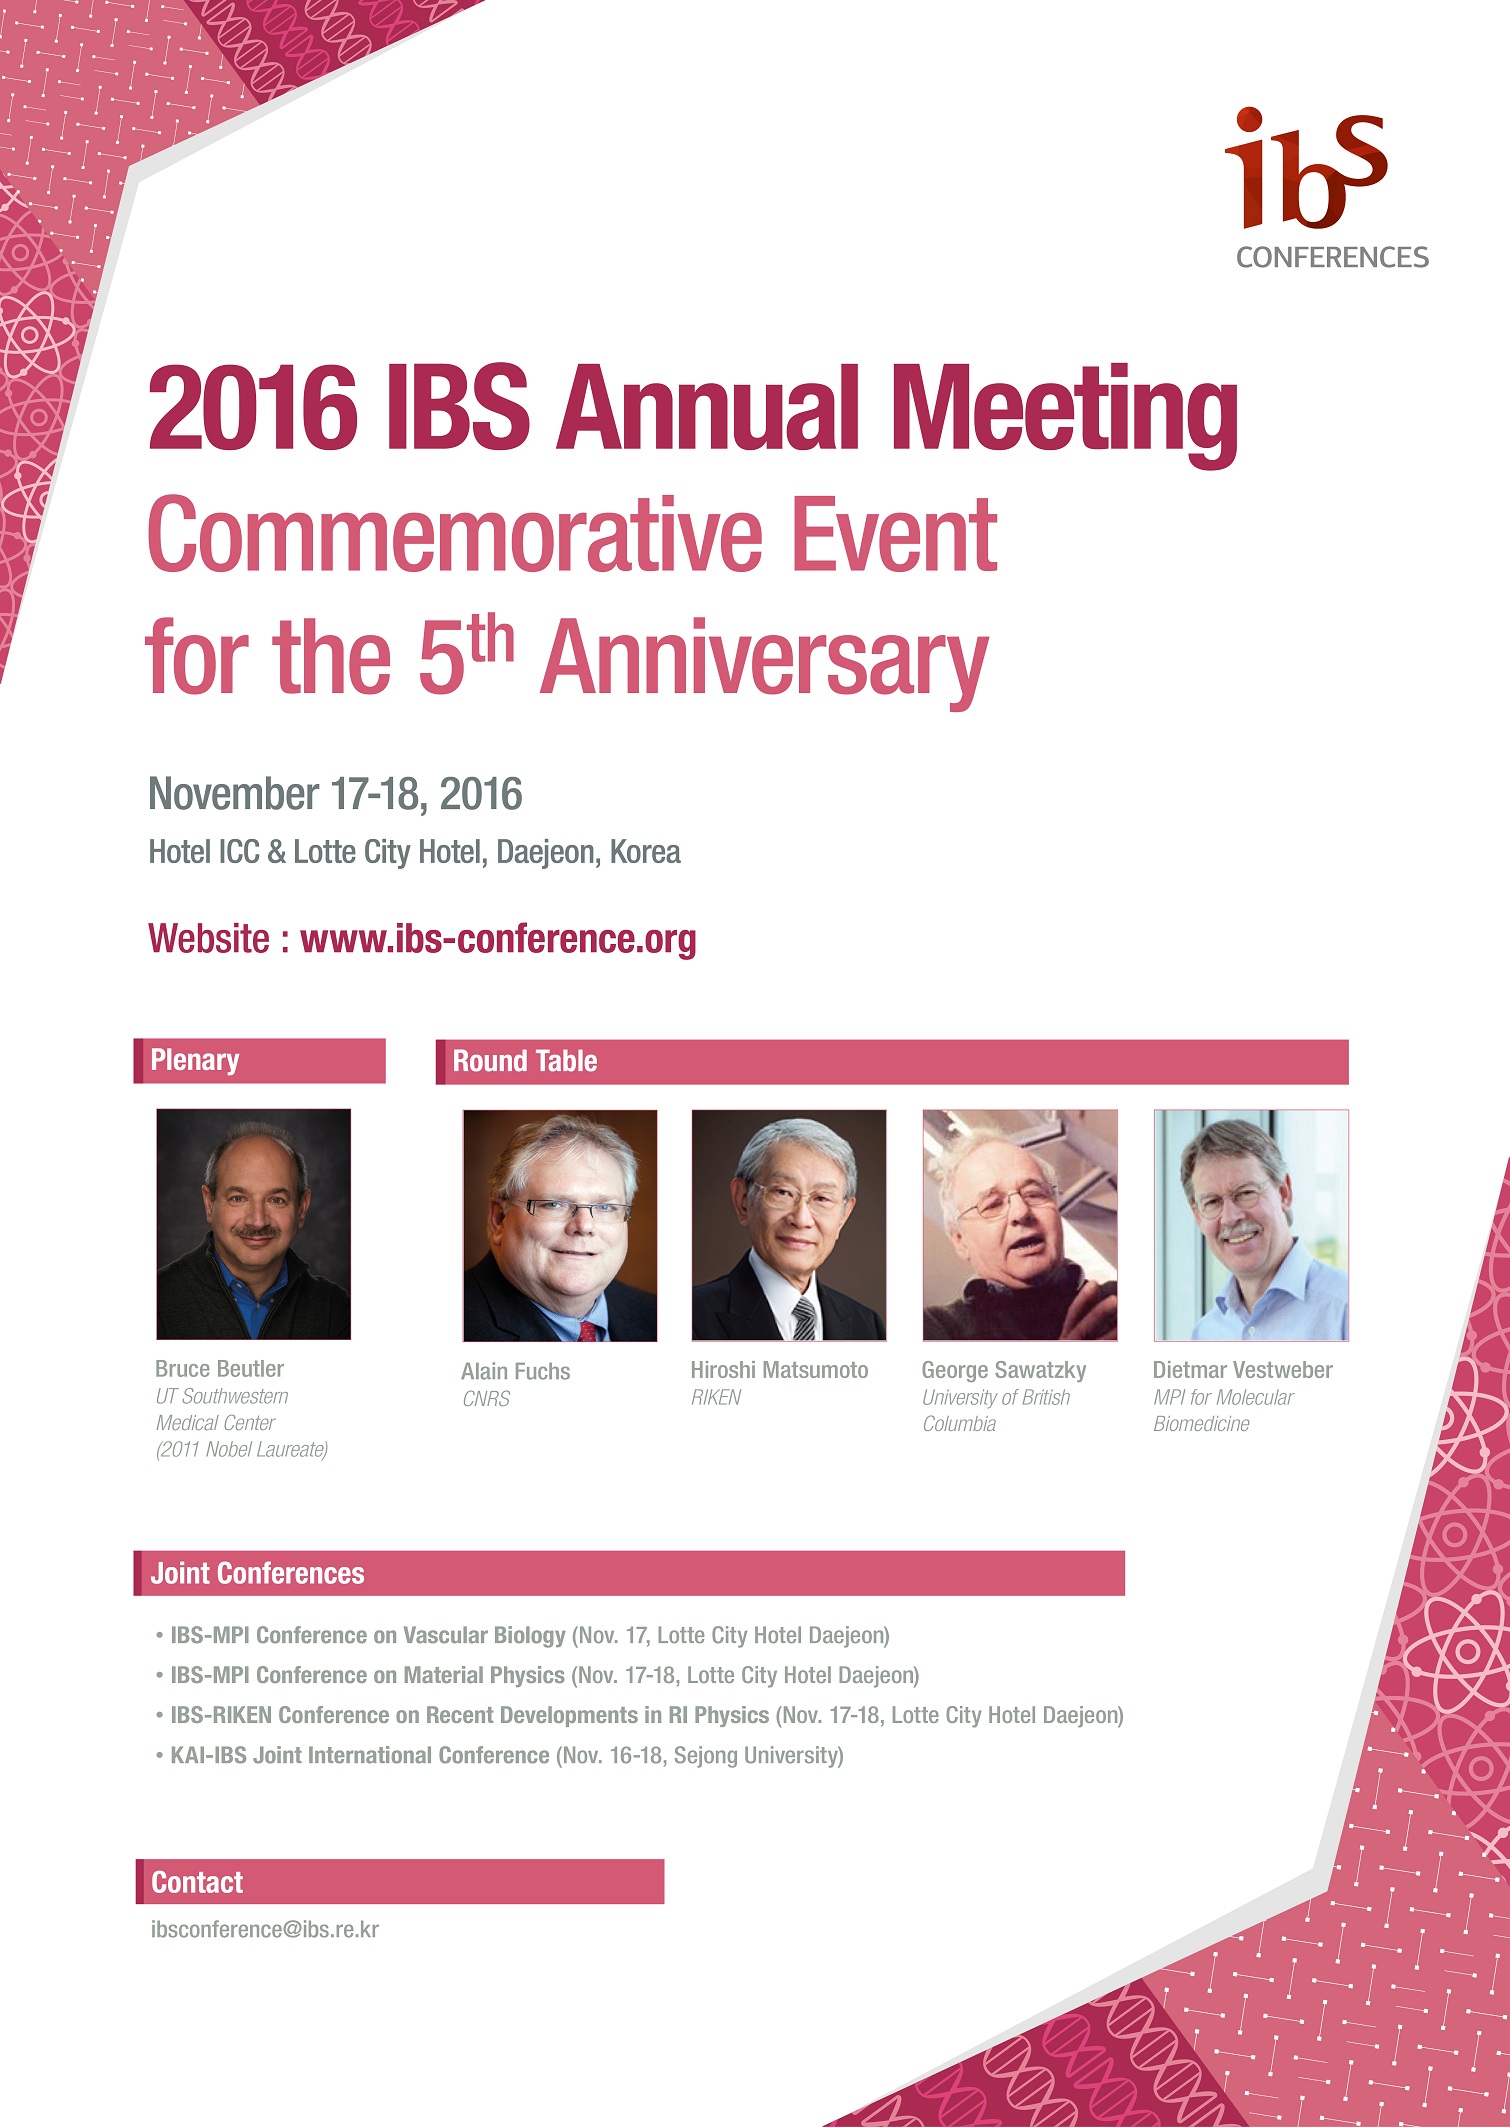 ibs annual meeting poster.jpg